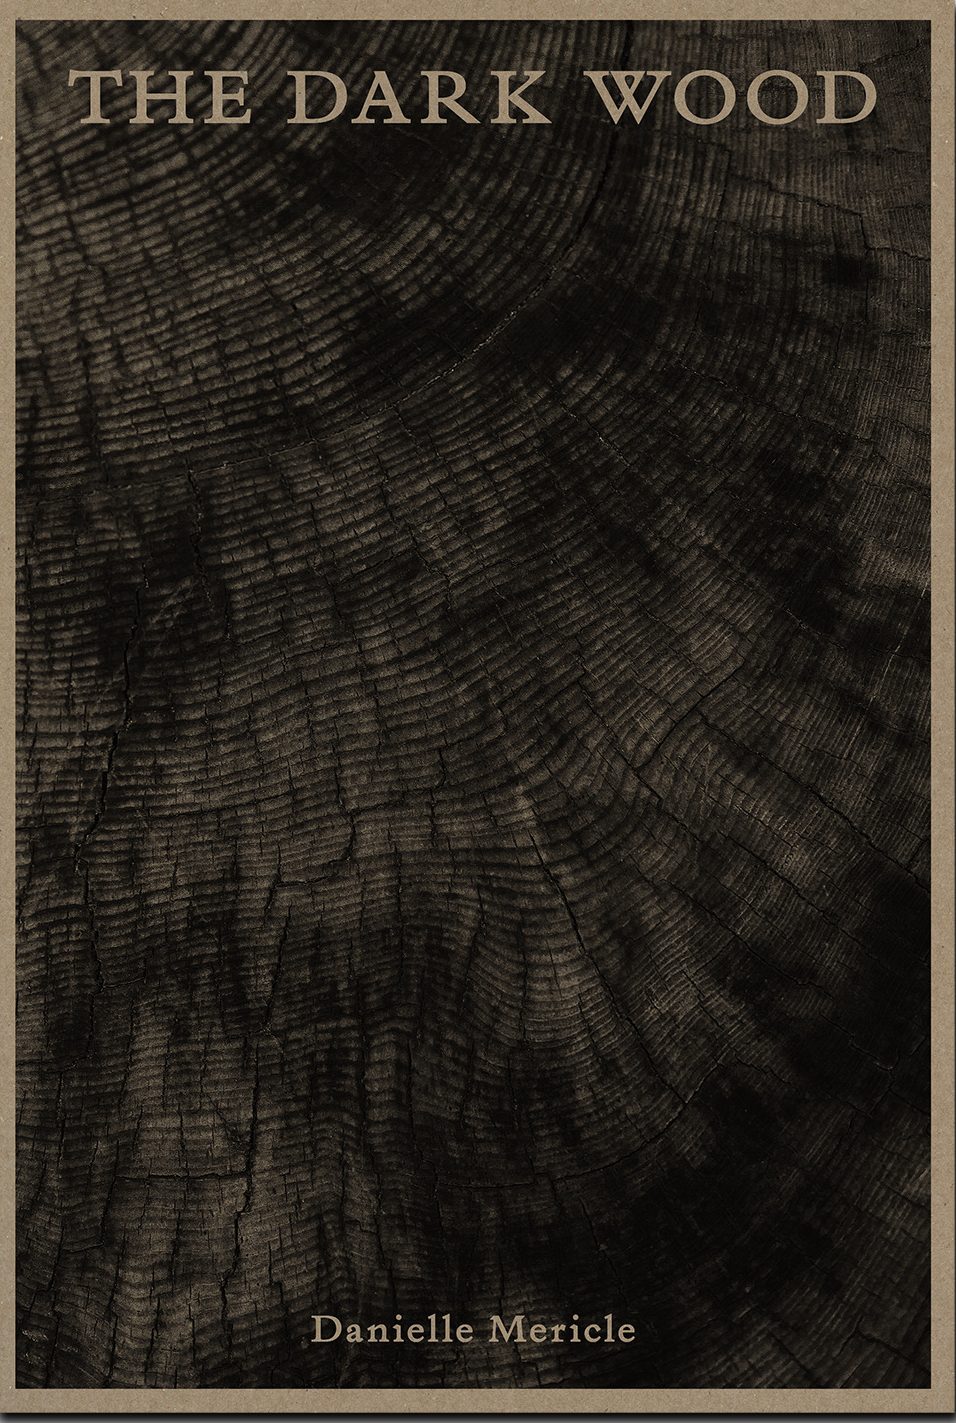 The Dark Wood, Danielle Mericle